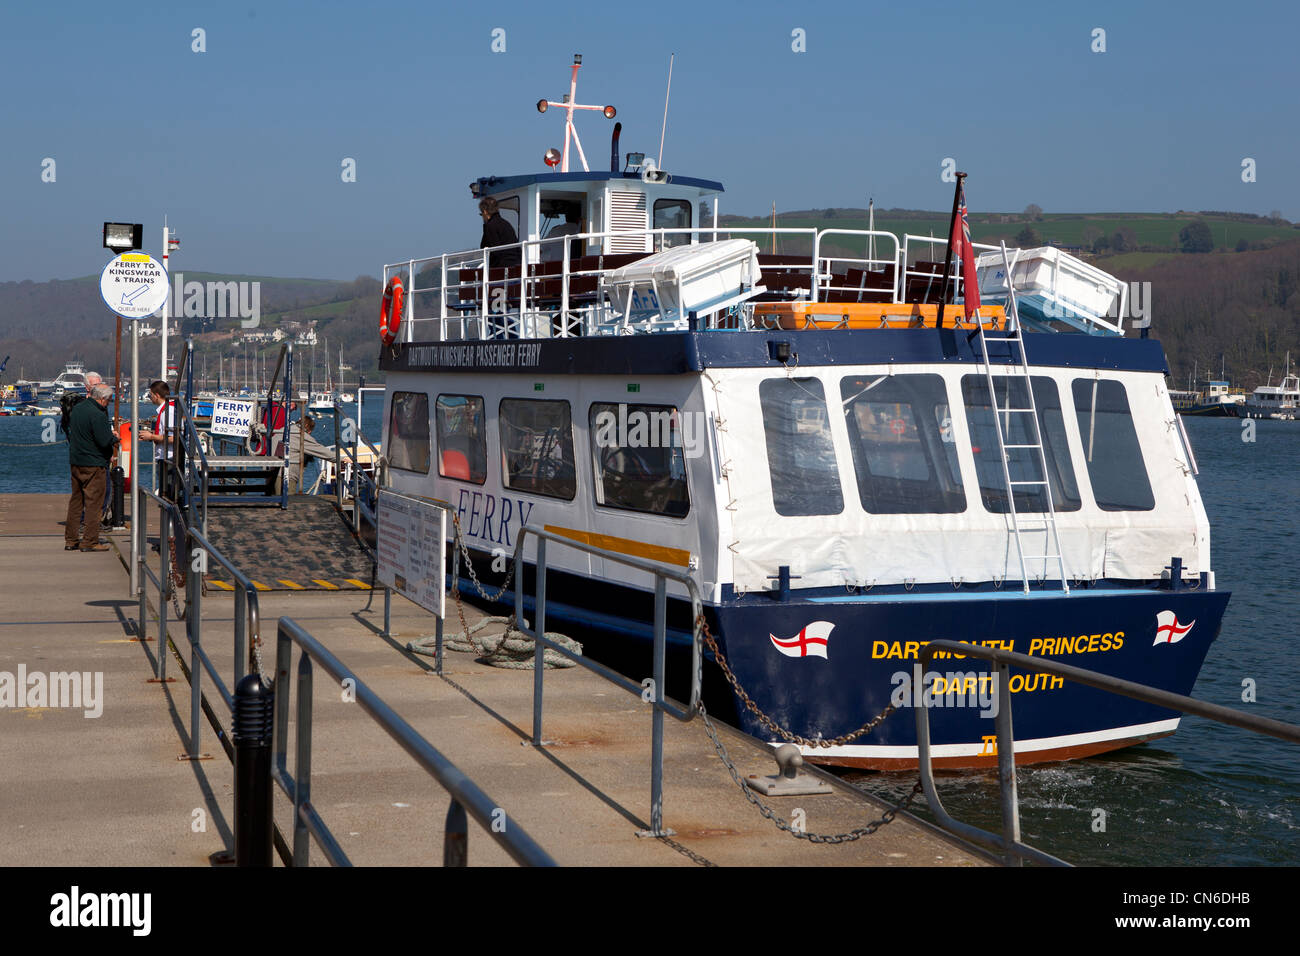 The Dartmouth to Kingswear passenger Ferry. The Dartmouth Princess. Stock Photo